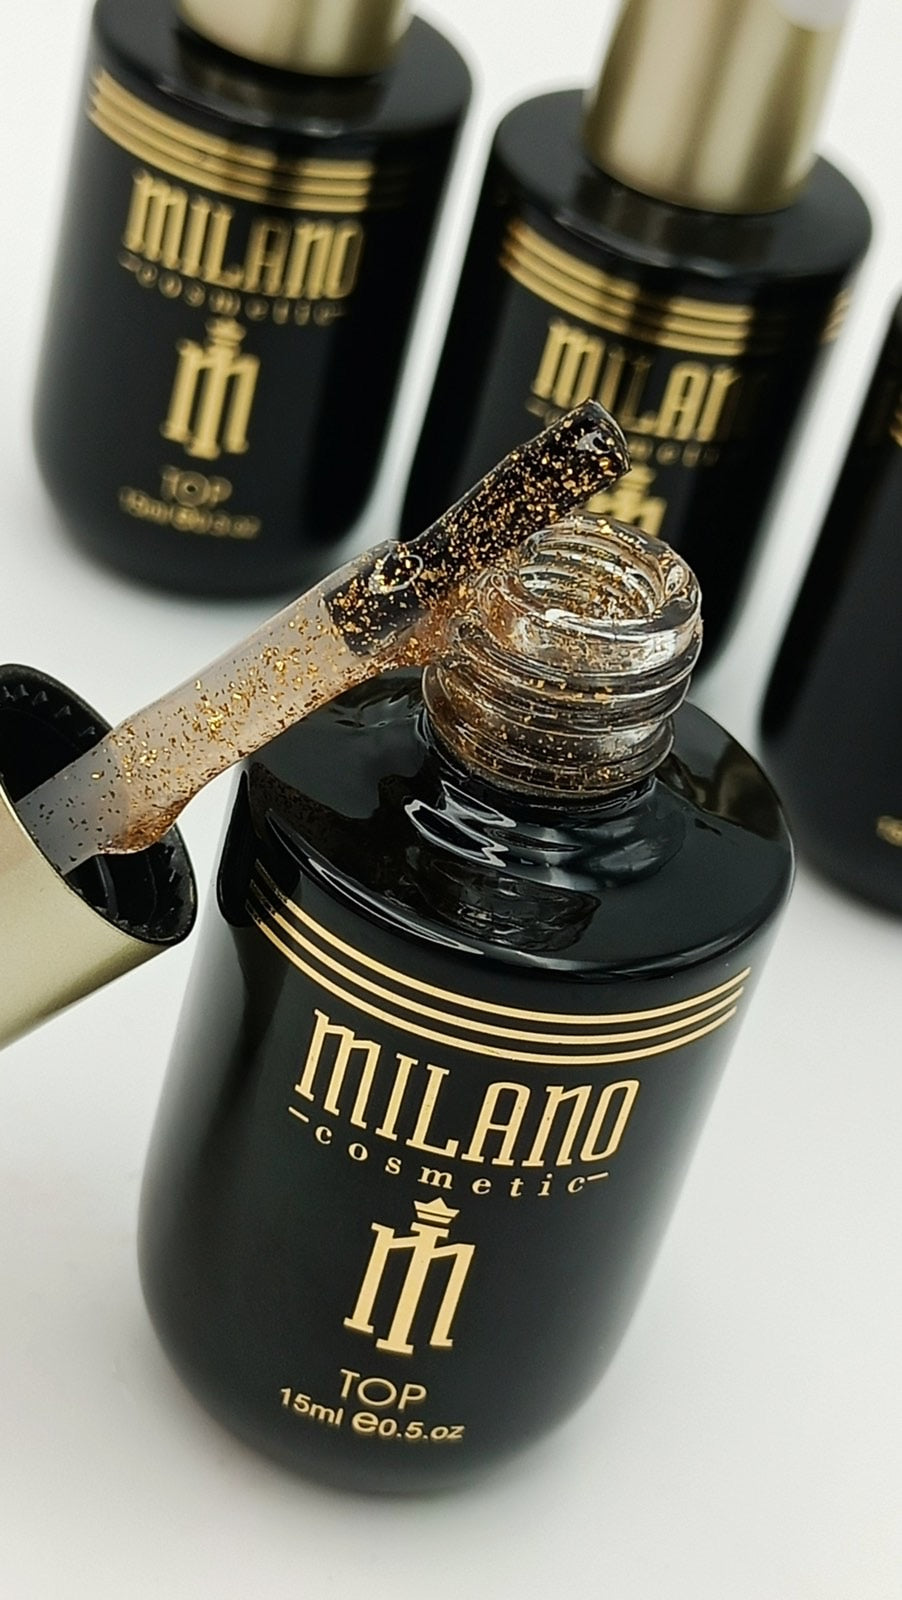 Top Gold Shimmer Milano 12ml